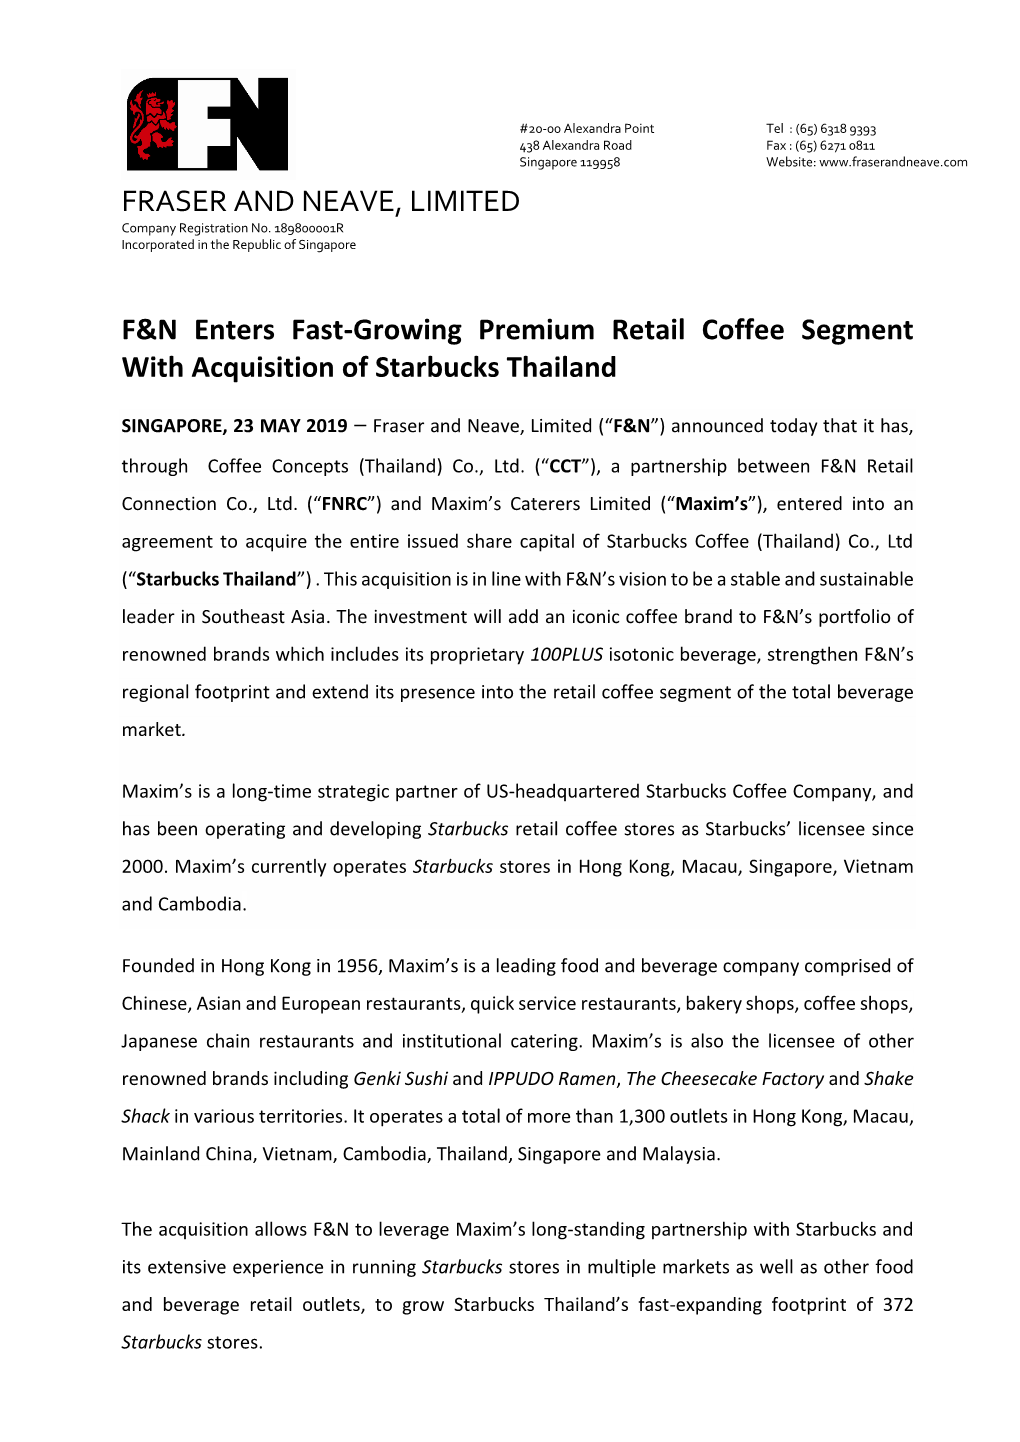 F&N Enters Fast-Growing Premium Retail Coffee Segment